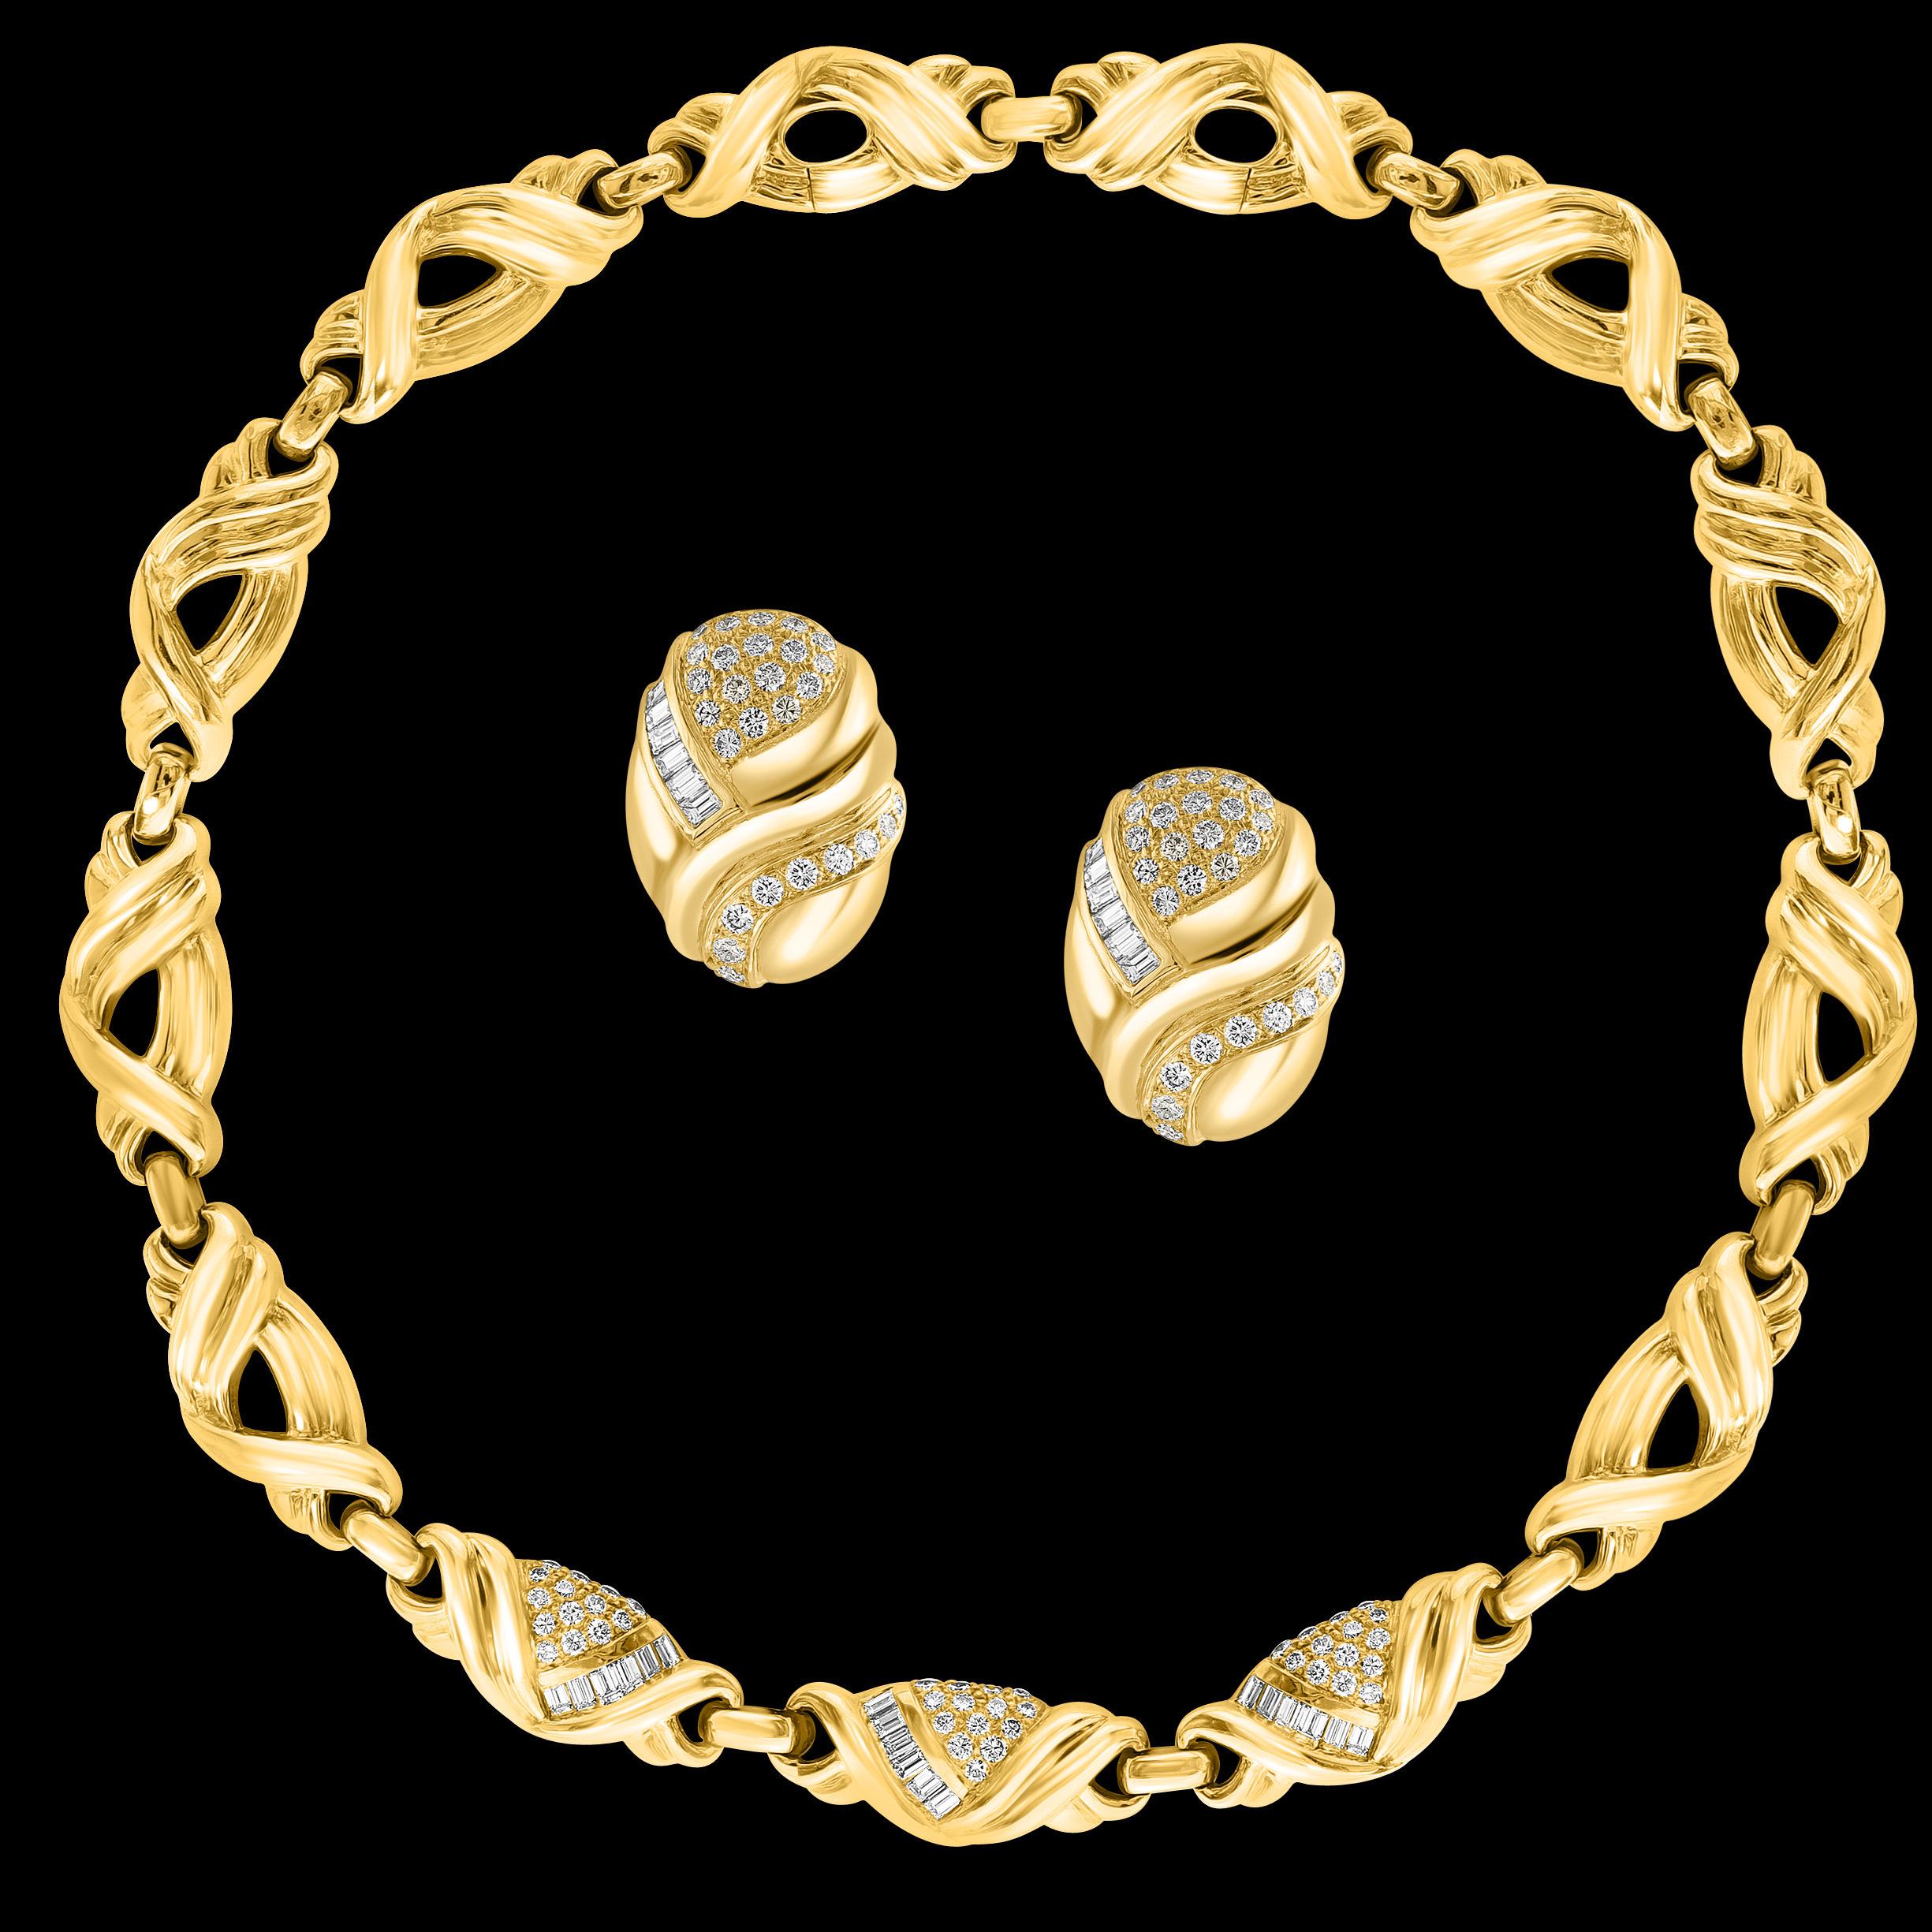 9 carat gold necklace price